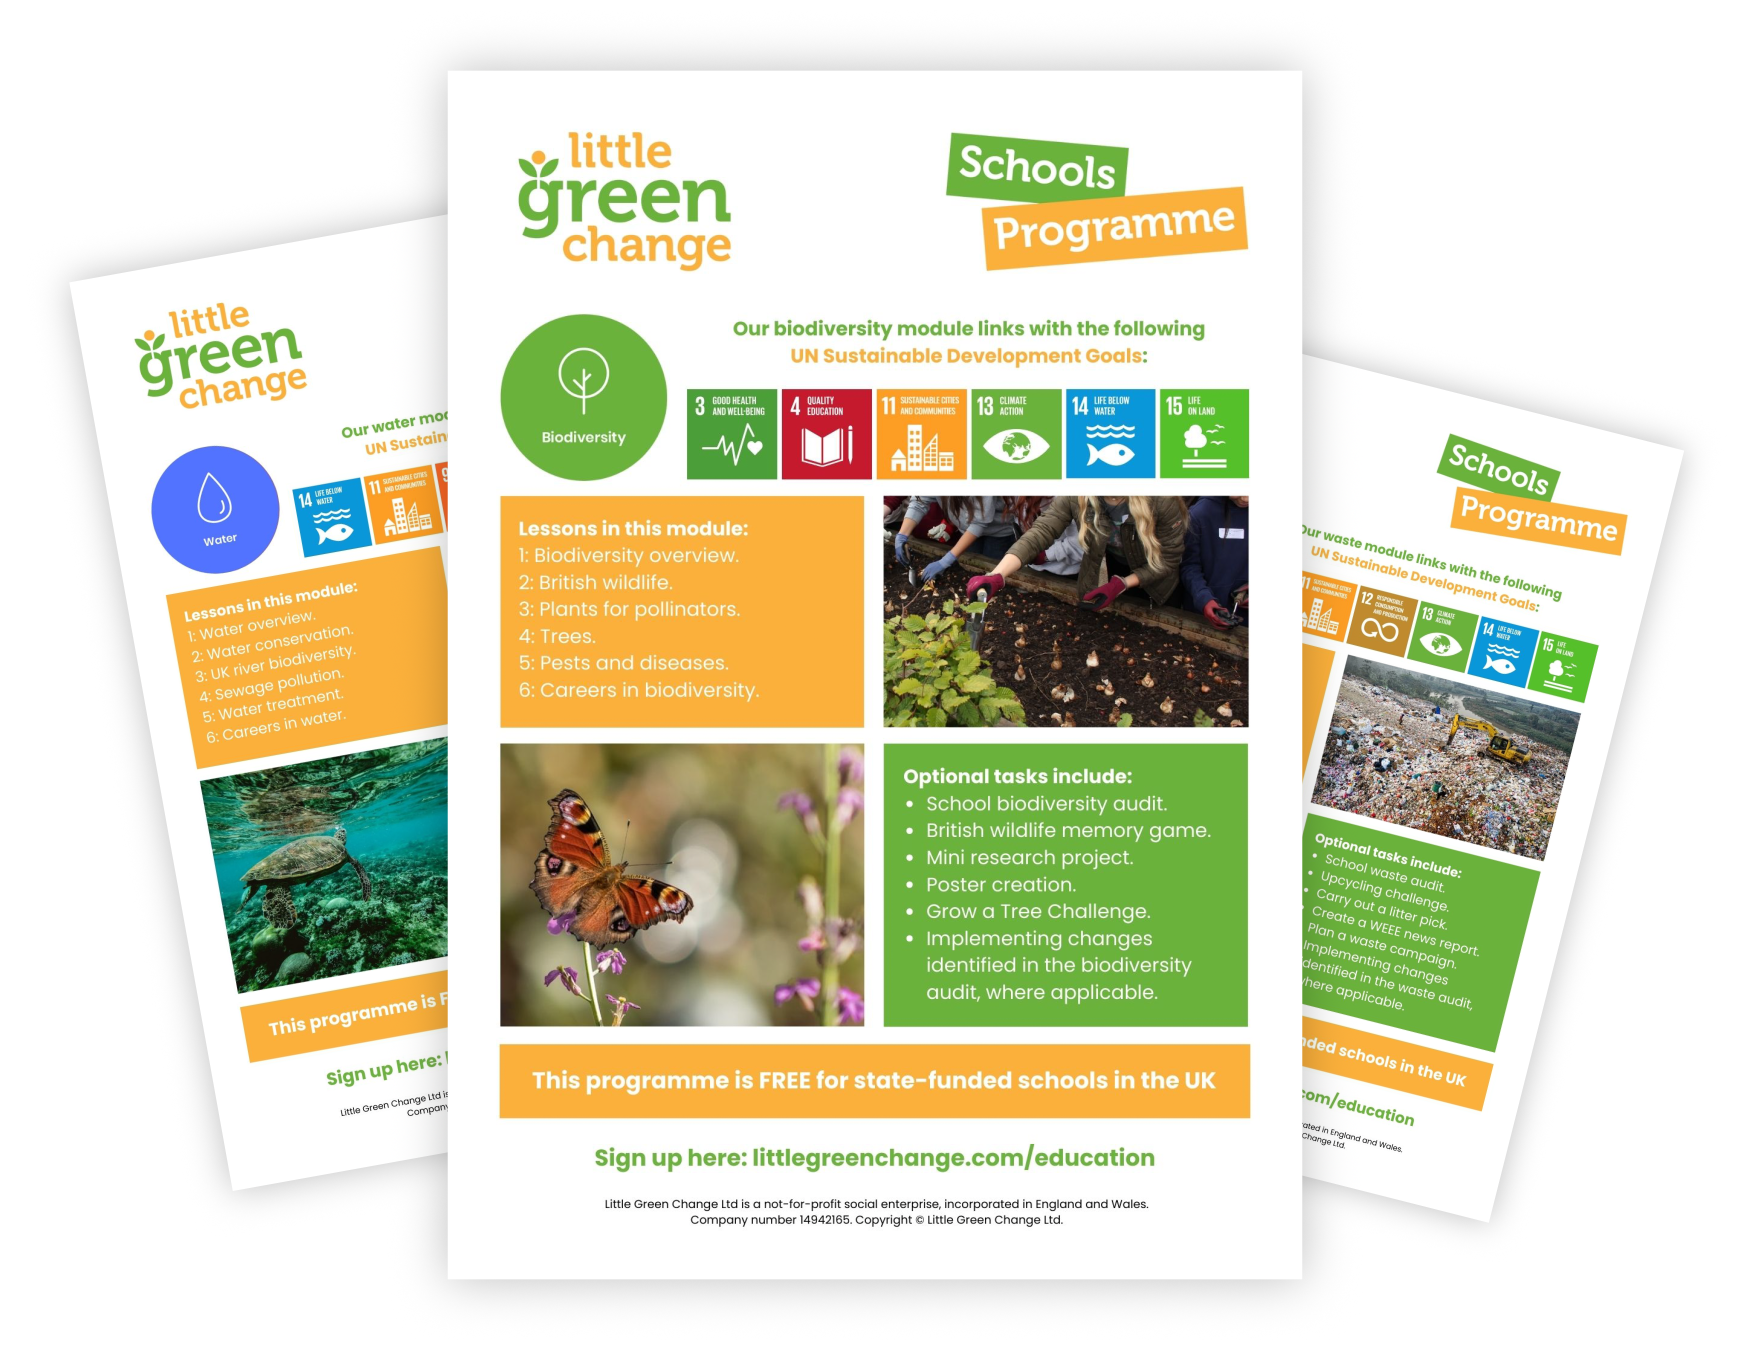 Little Green Change's Schools Programme modules